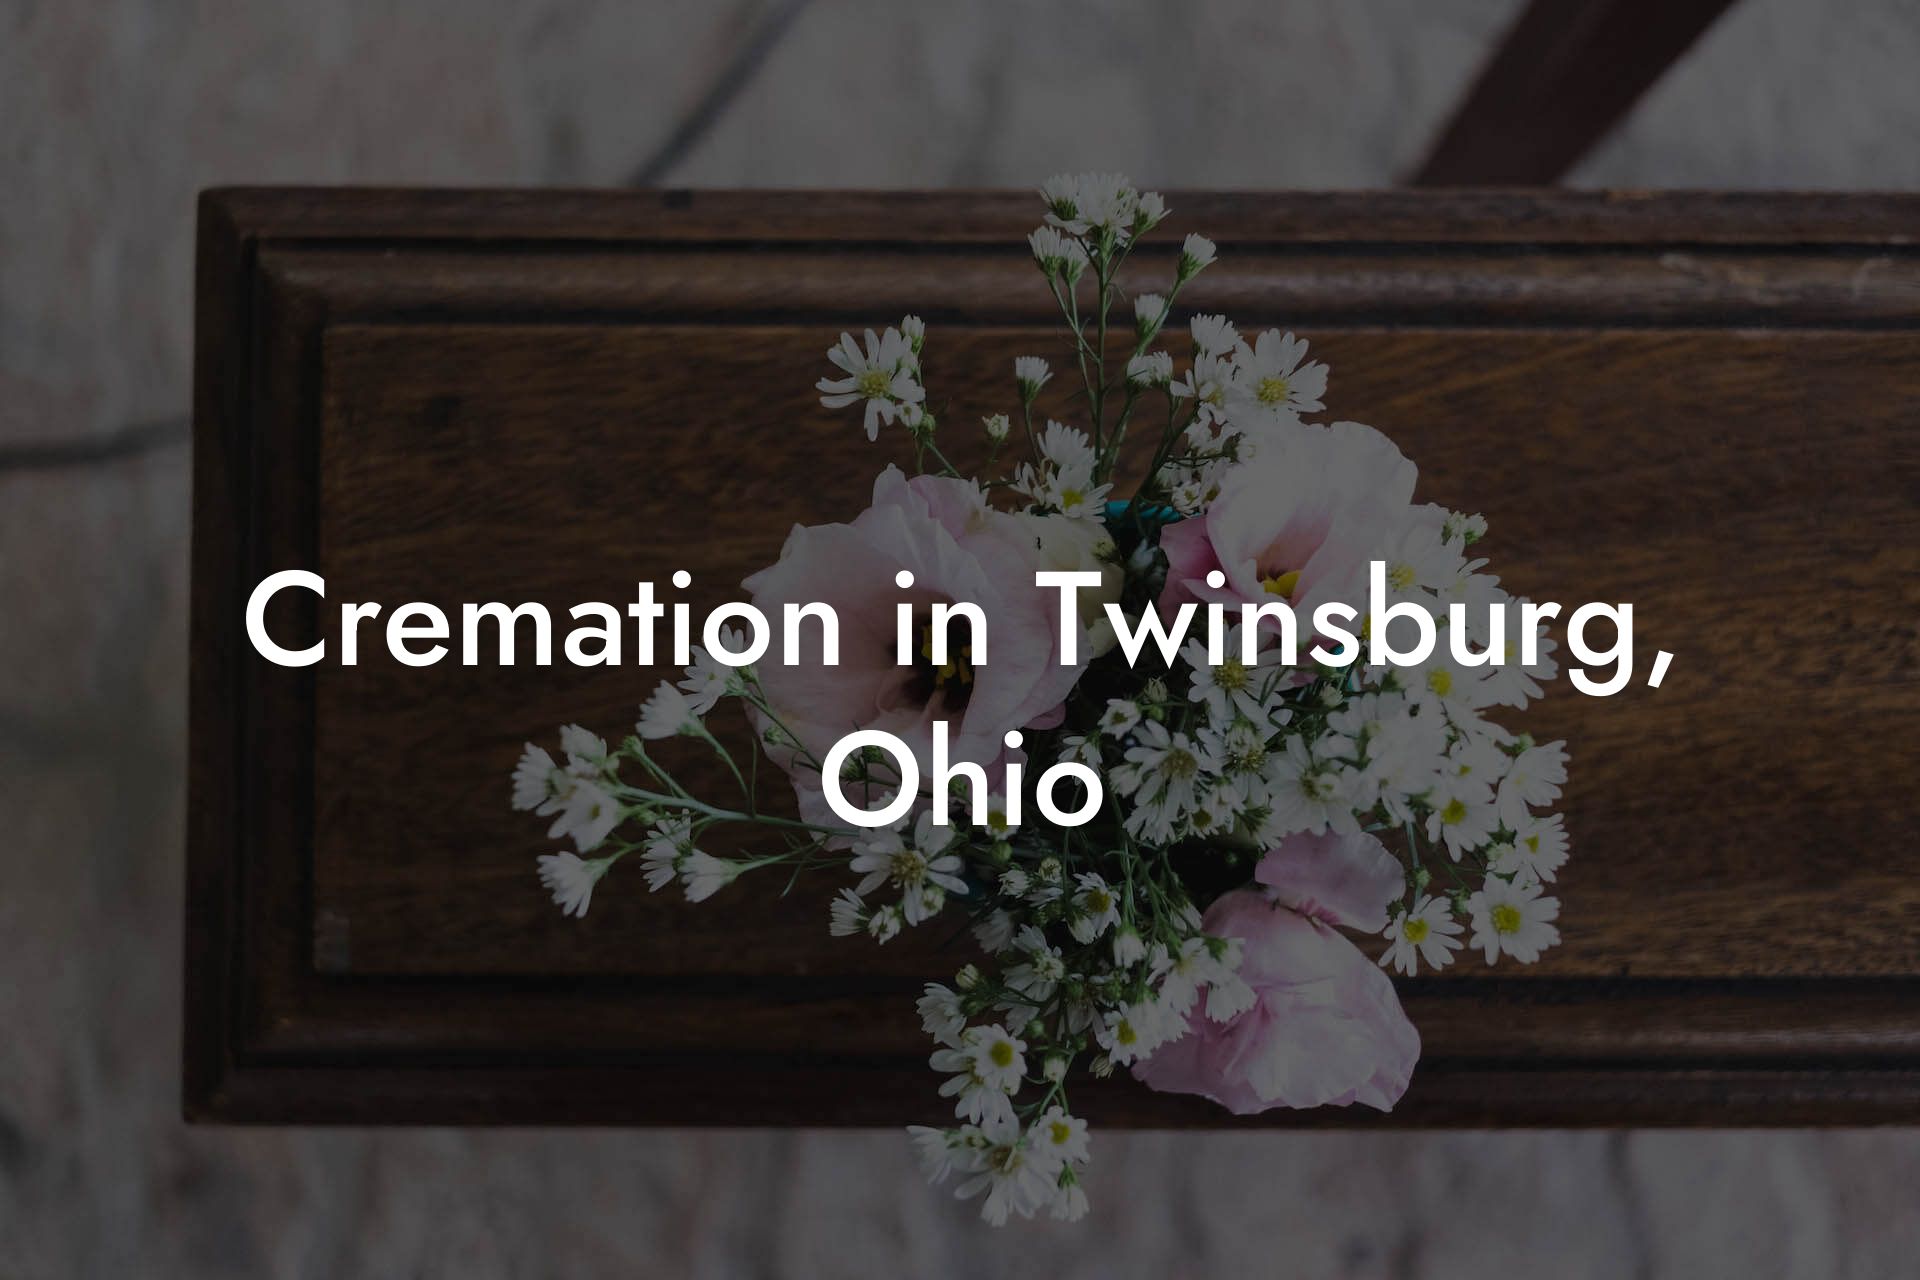 Cremation in Twinsburg, Ohio